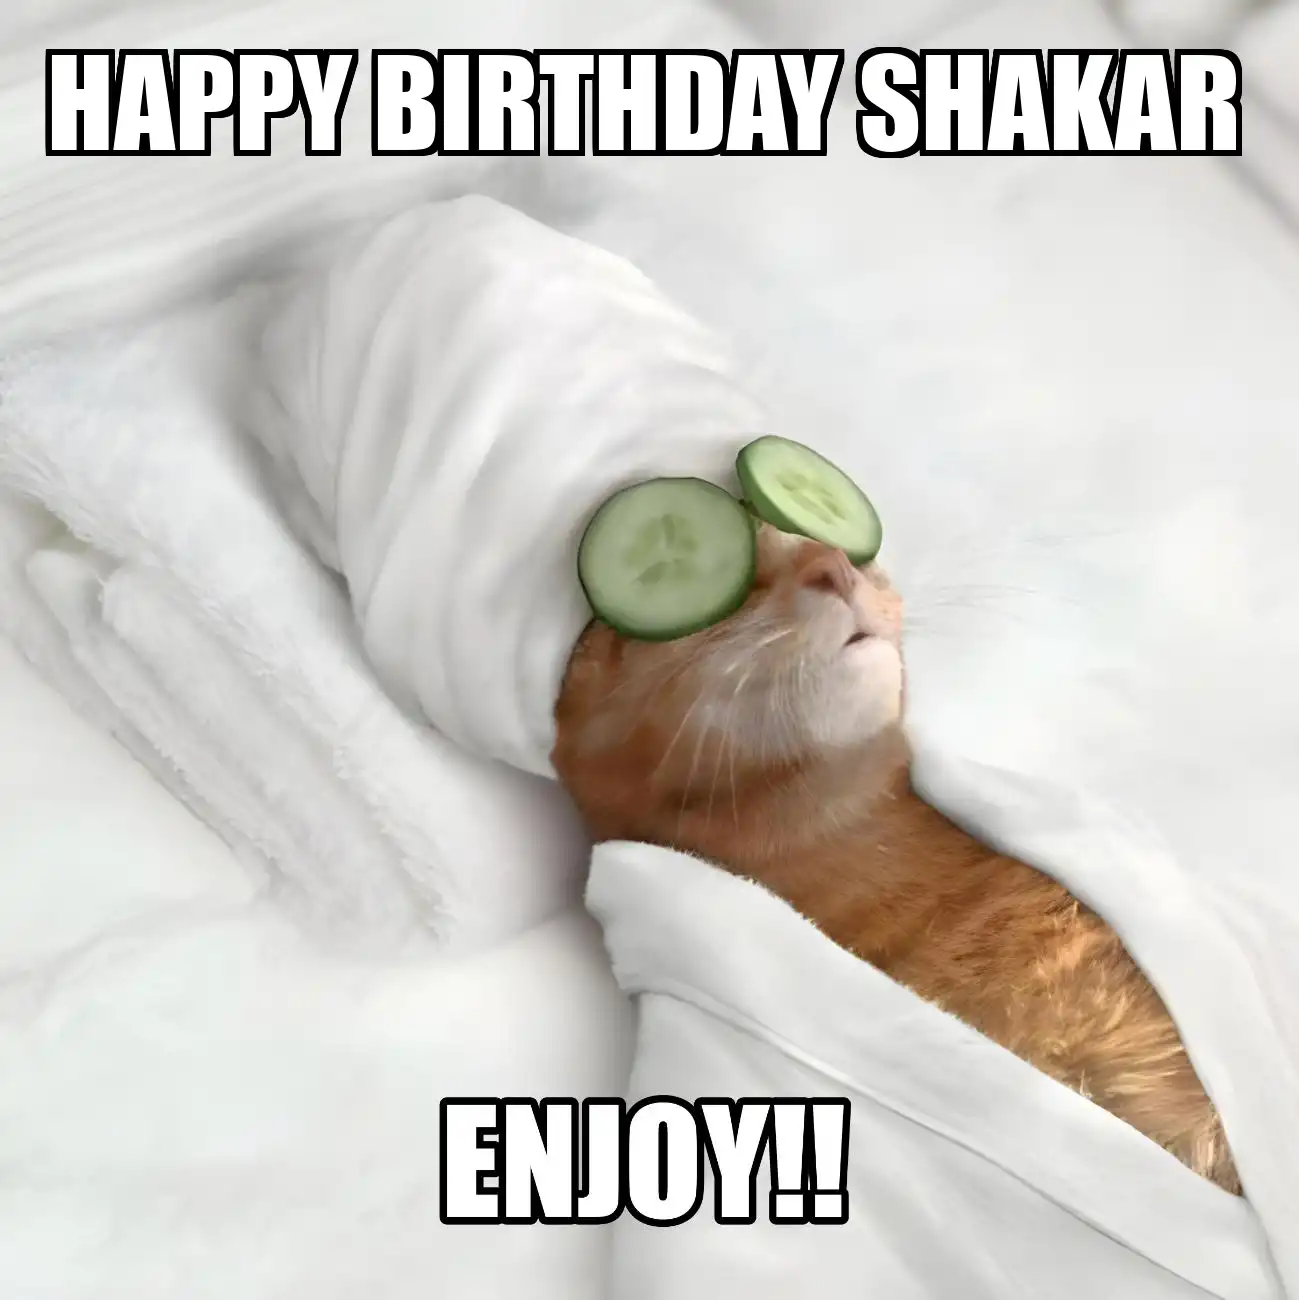 Happy Birthday Shakar Enjoy Cat Meme